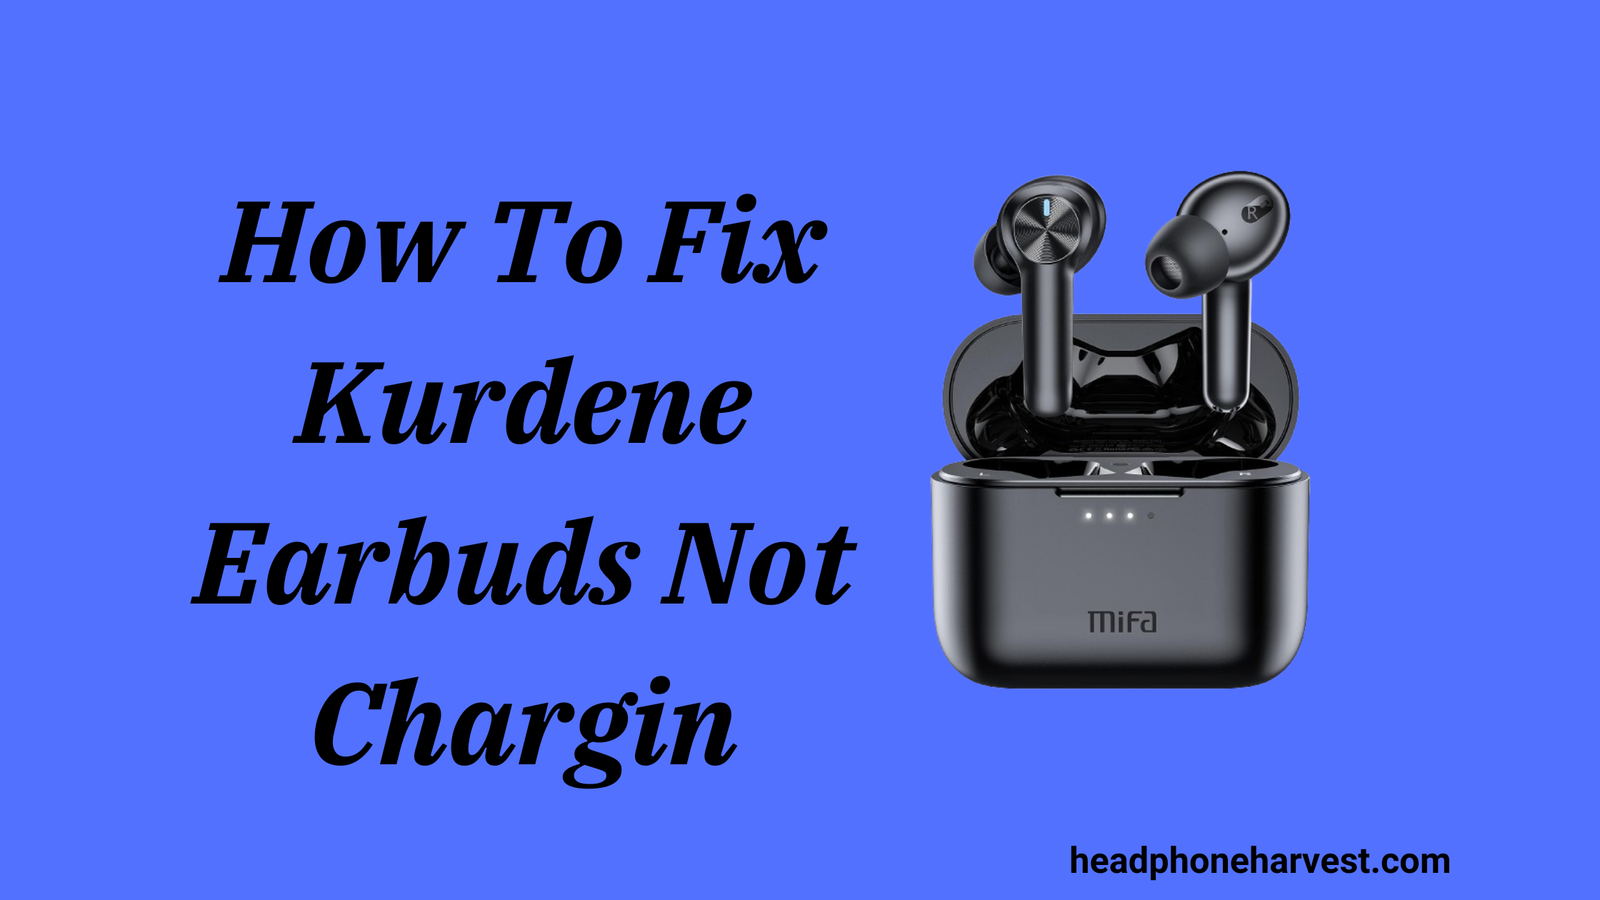 How To Fix Kurdene Earbuds Not Chargin